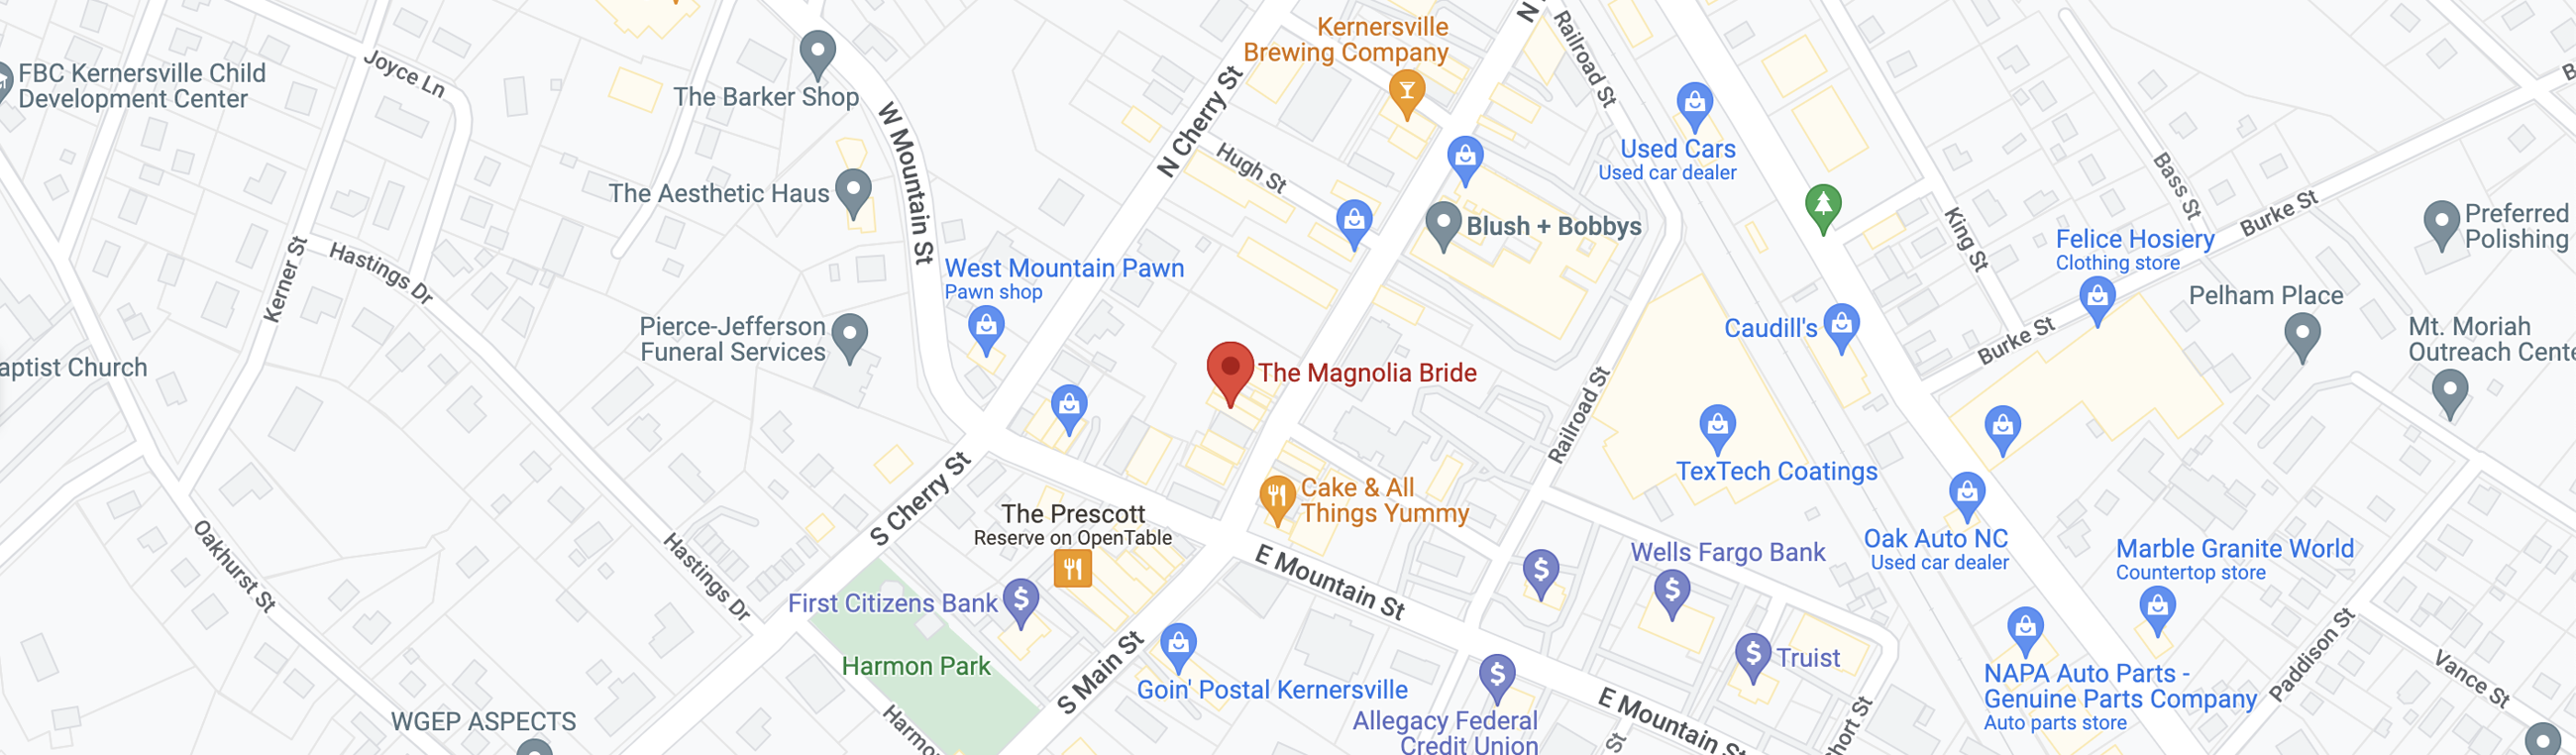 The Magnolia Bride location